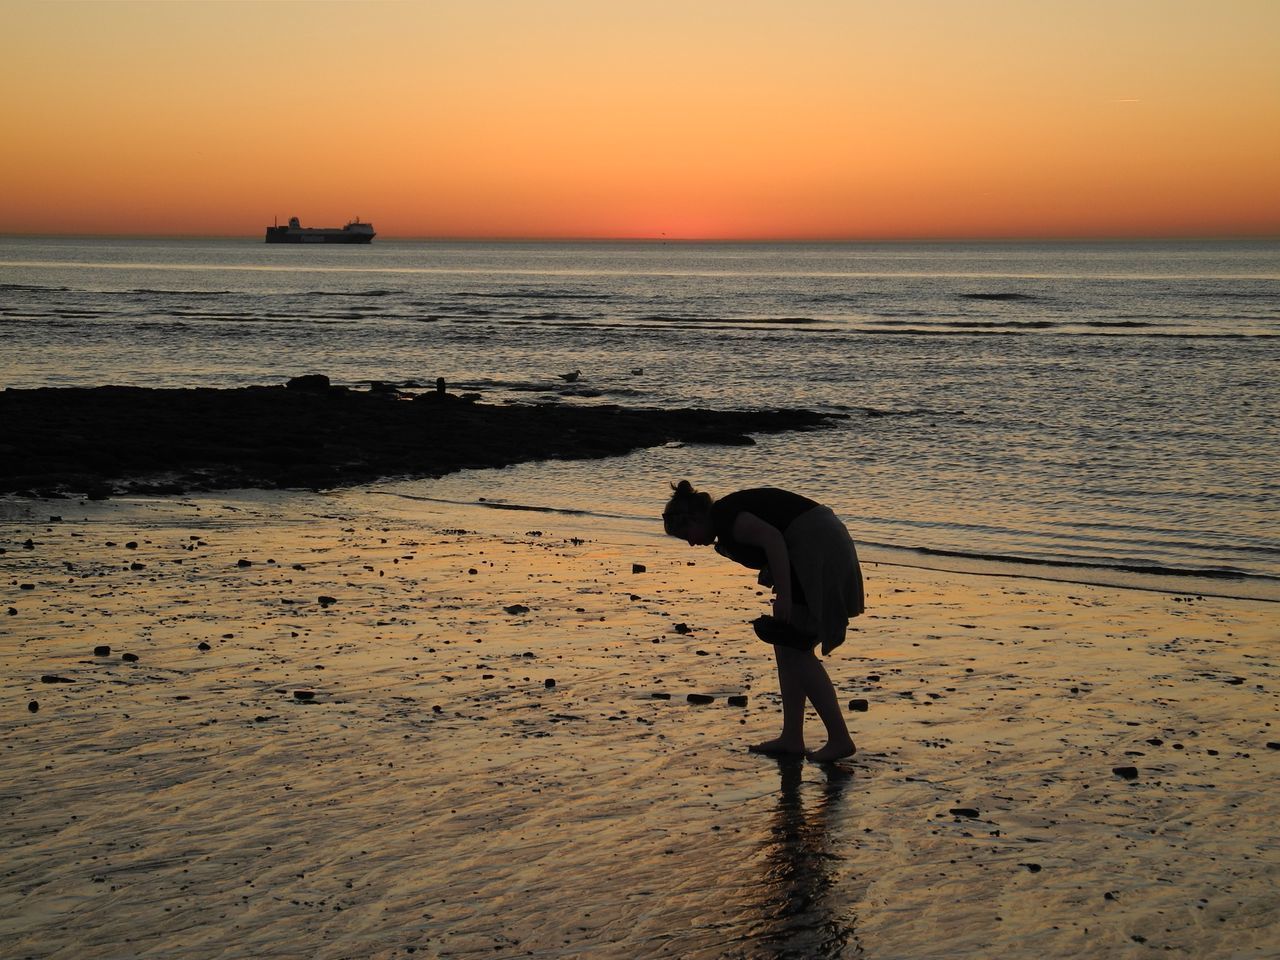 SILHOUETTE MAN WALKING ON BEACH AGAINST CLEAR SKY